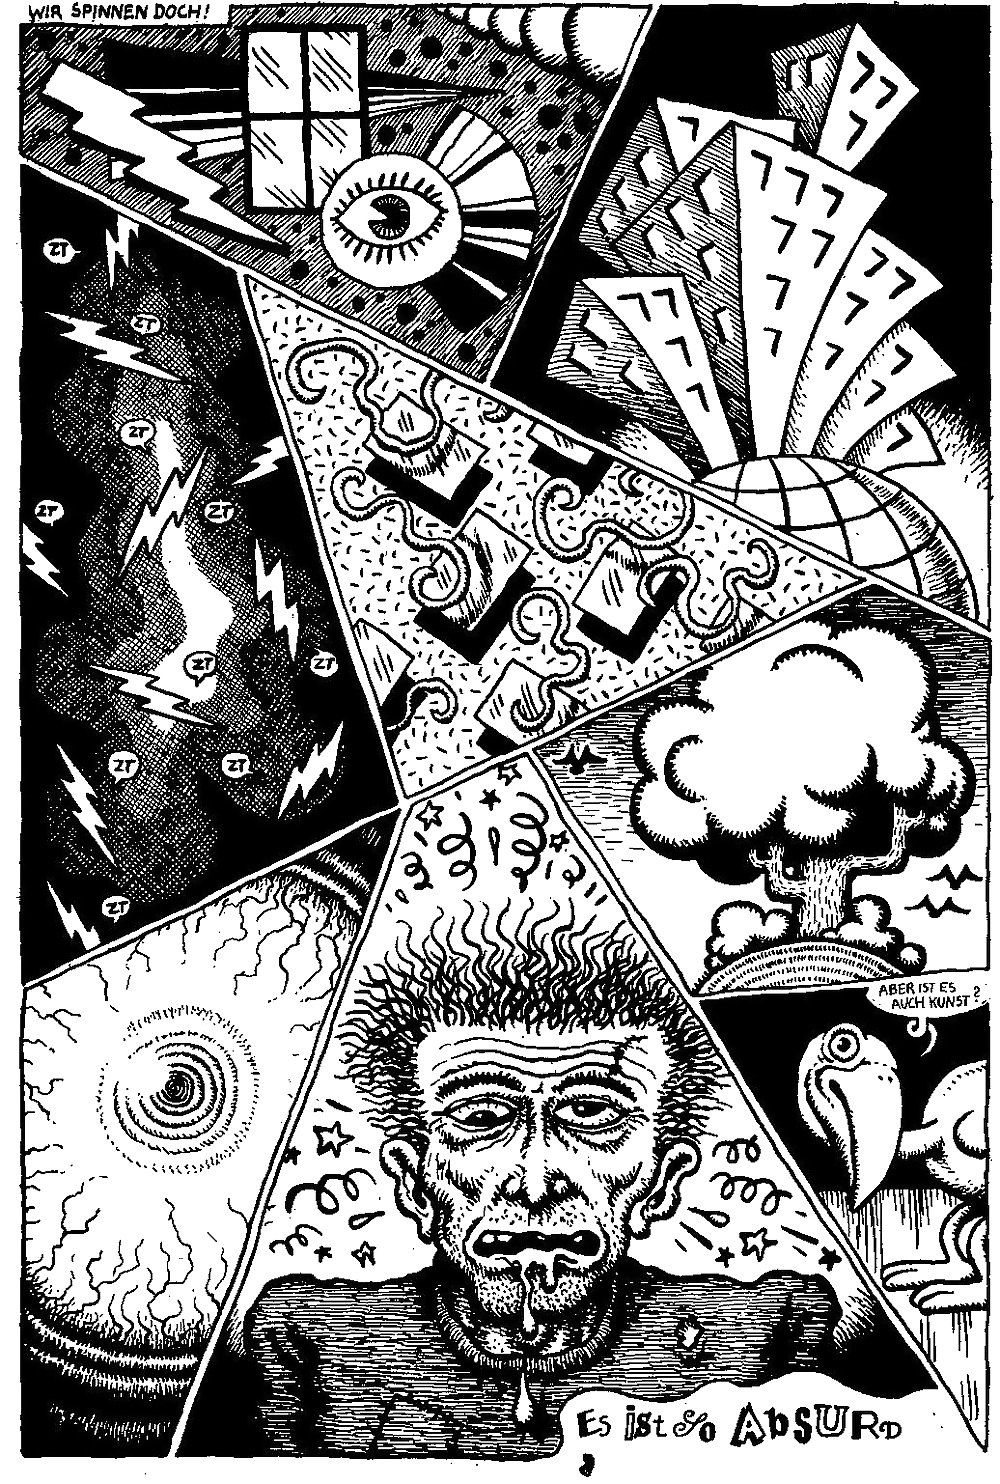 Crumb kubistic comic by jedman #14463161